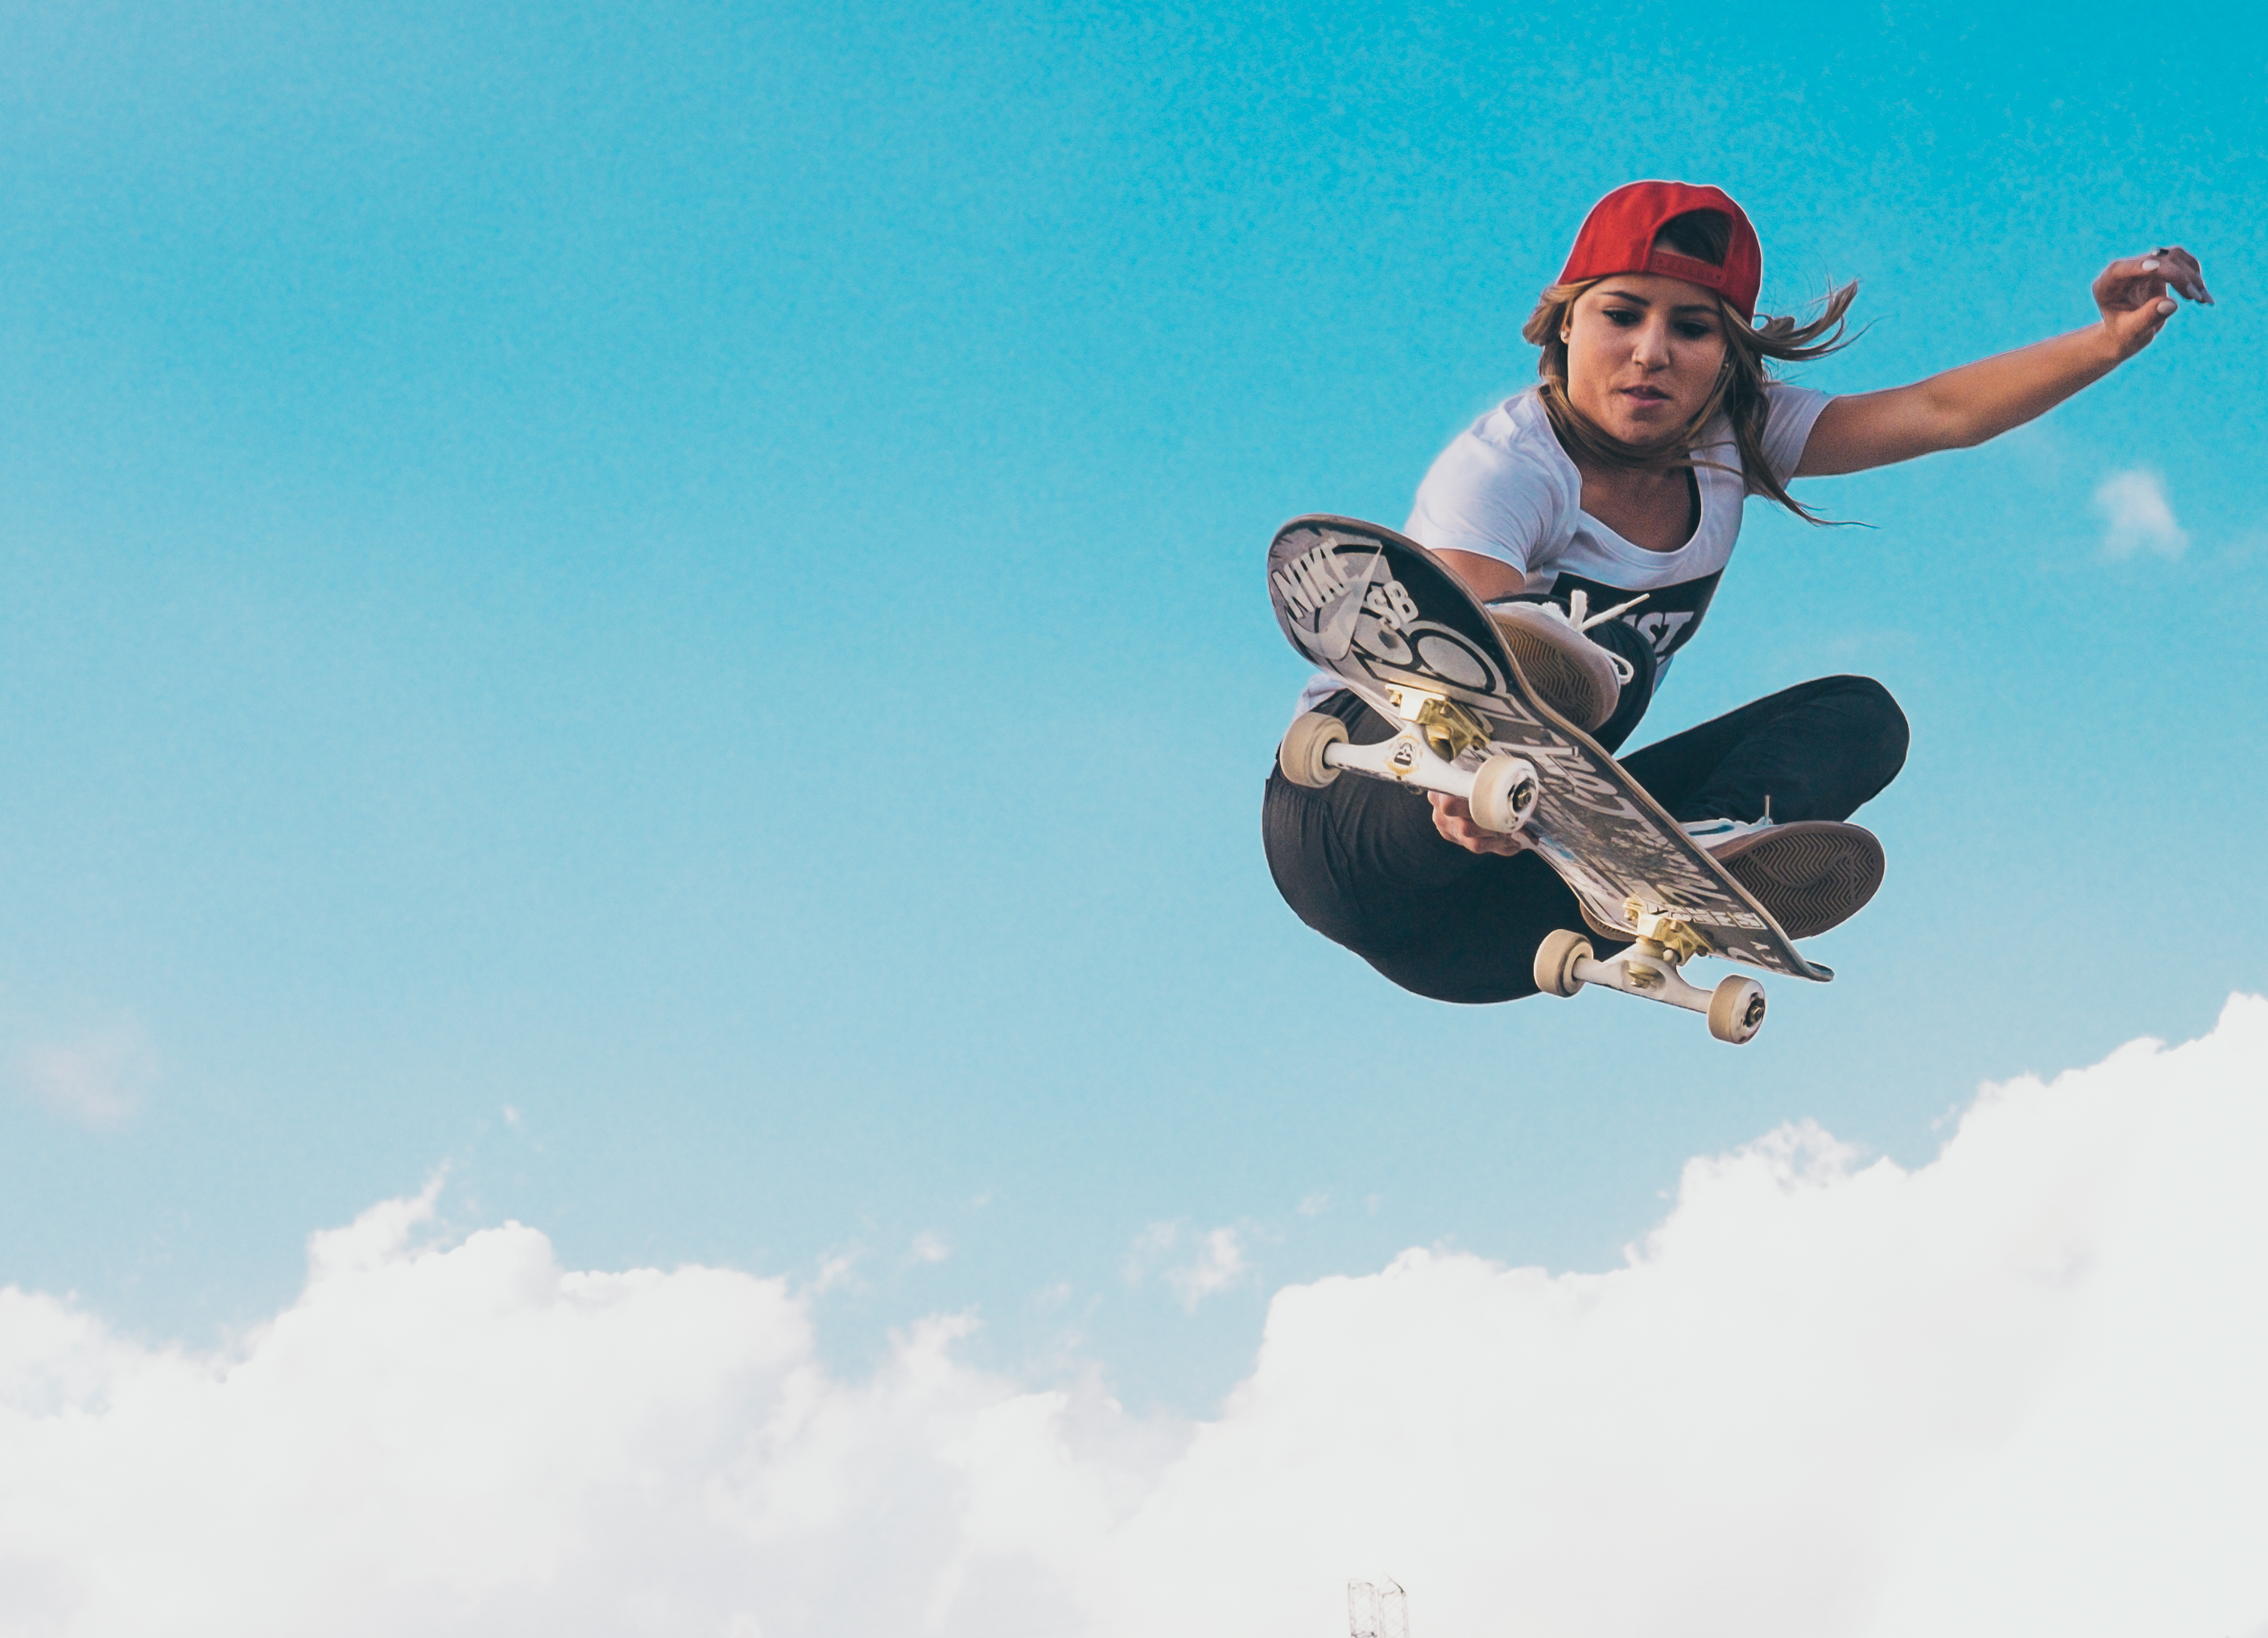 Leticia Bufoni, professional skateboarder